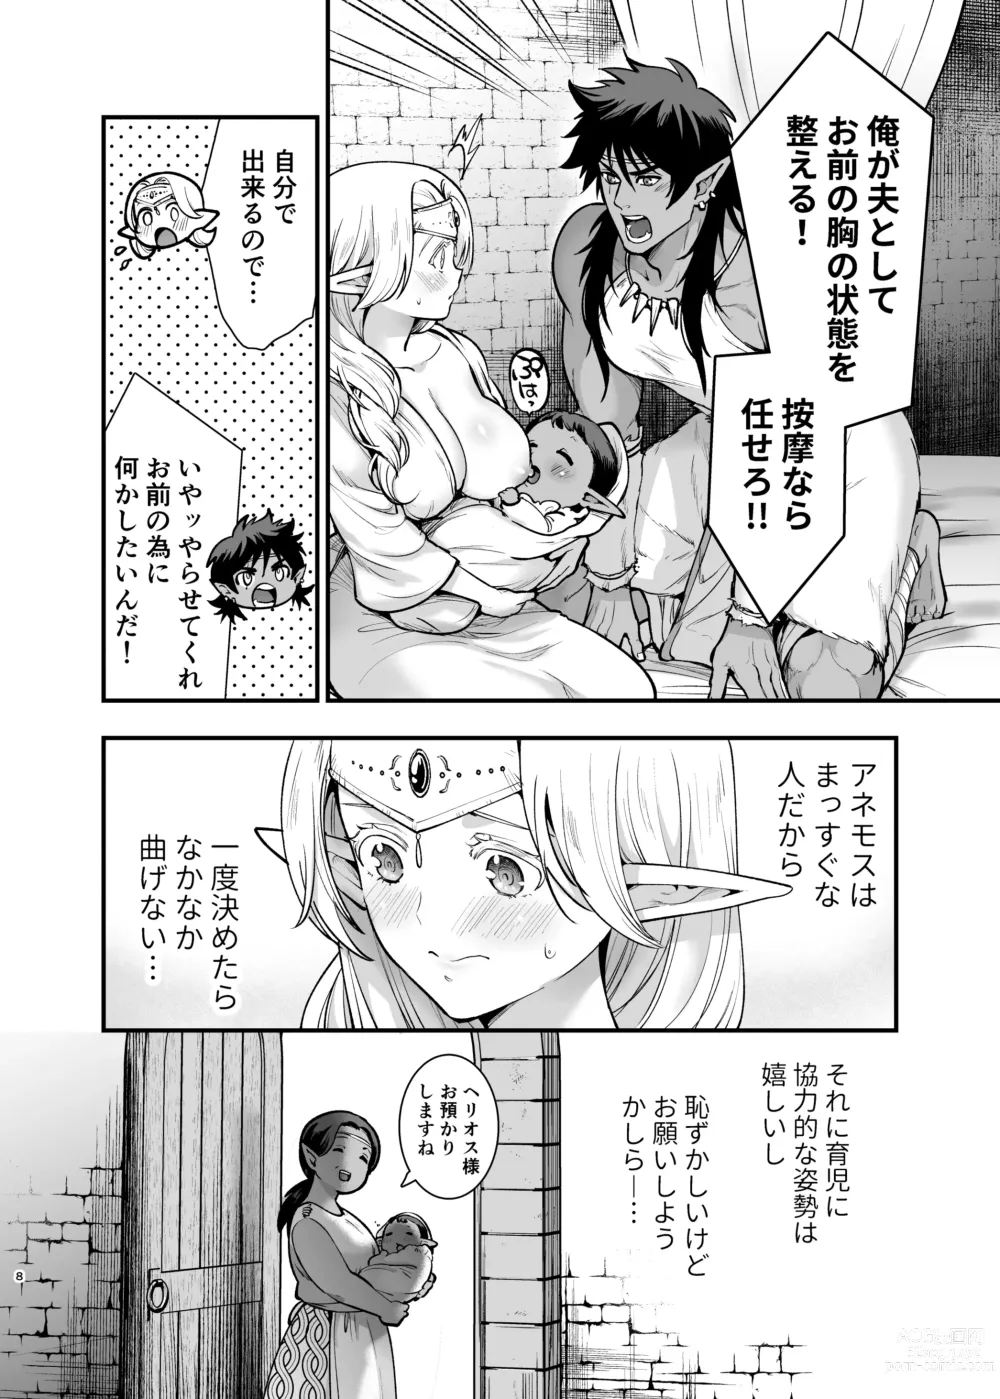 Page 7 of doujinshi Orc no Hanayome After